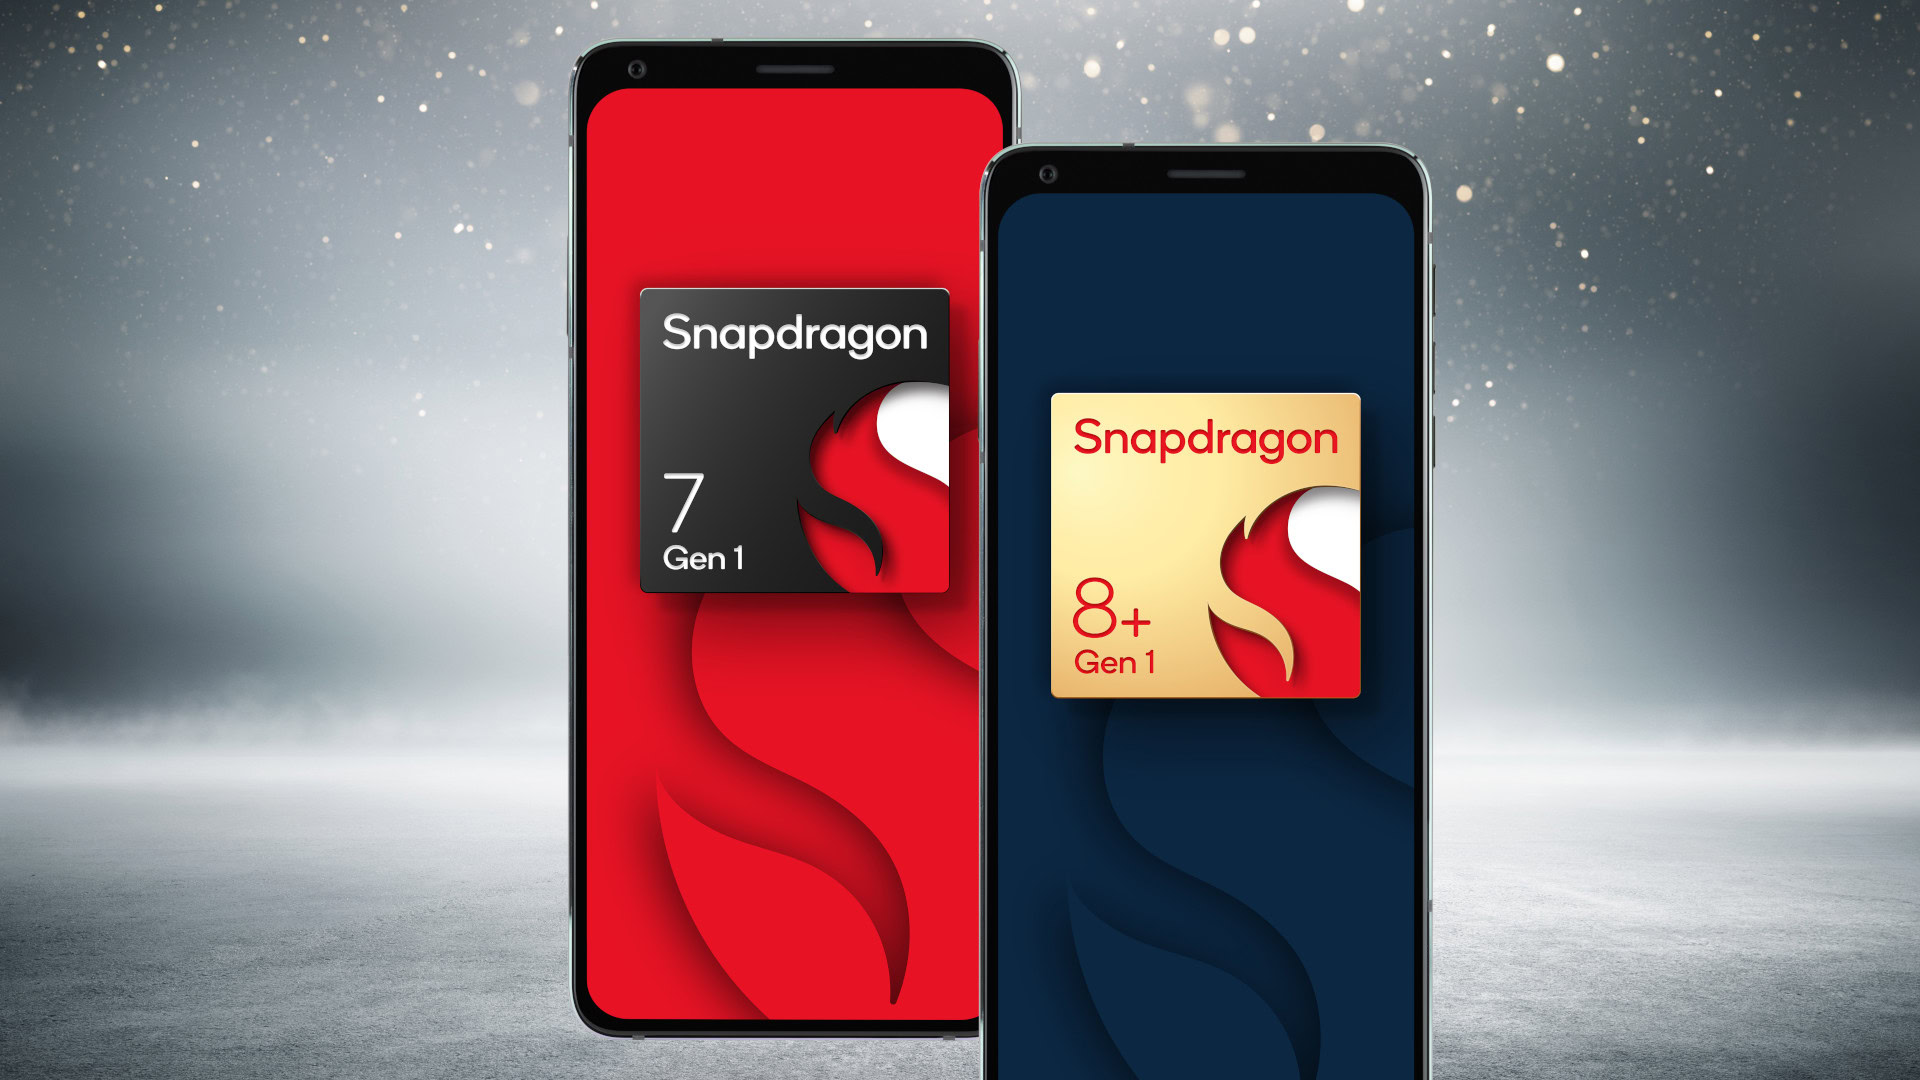 Qualcomm Snapdragon 7 Gen 1 and 8 Plus Gen 1 mockups